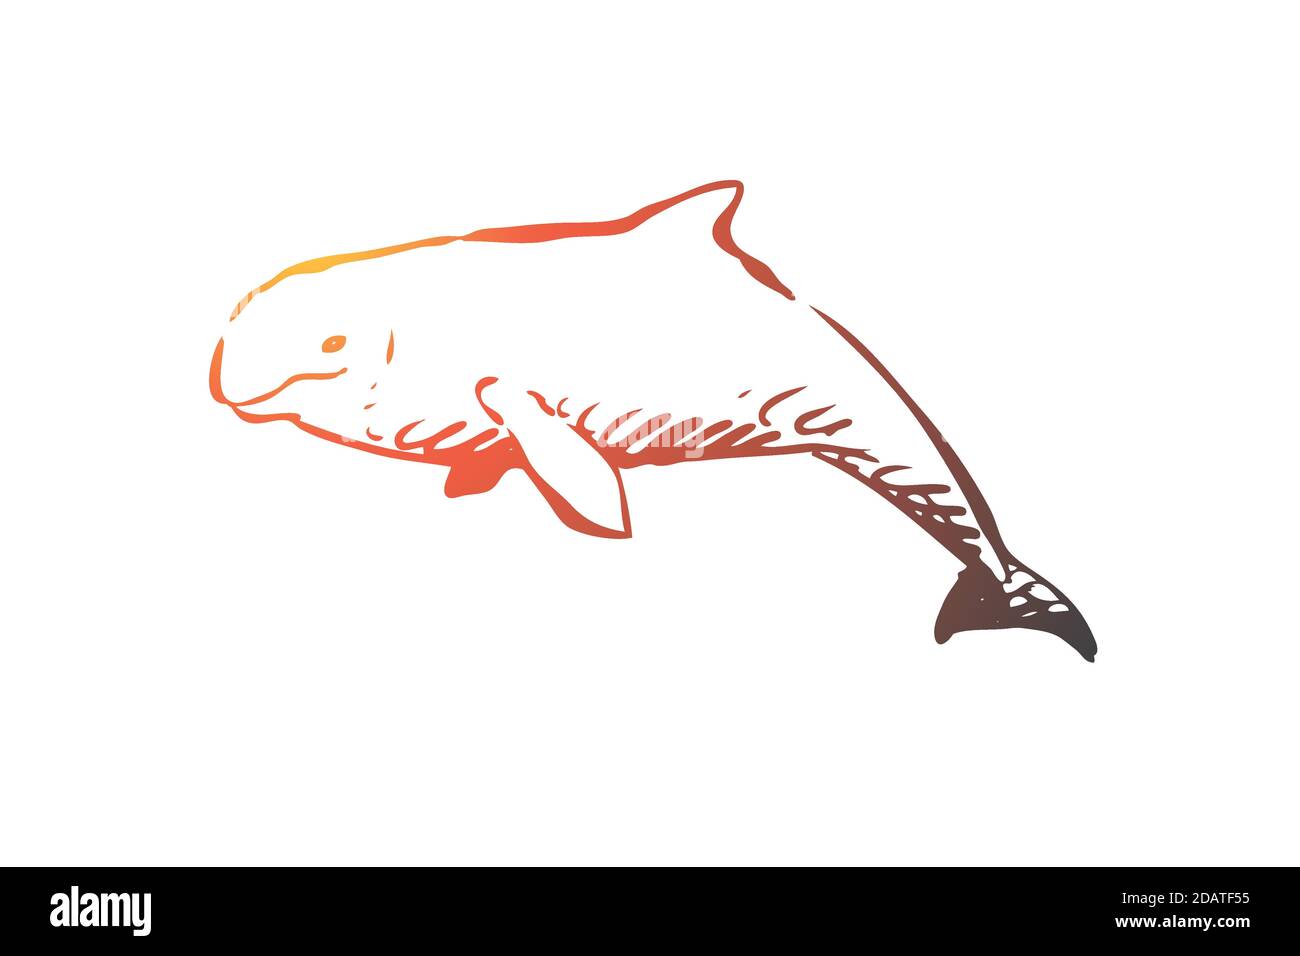 Beluga, sea, water, wildlife, hausen concept. Hand drawn isolated vector. Stock Vector